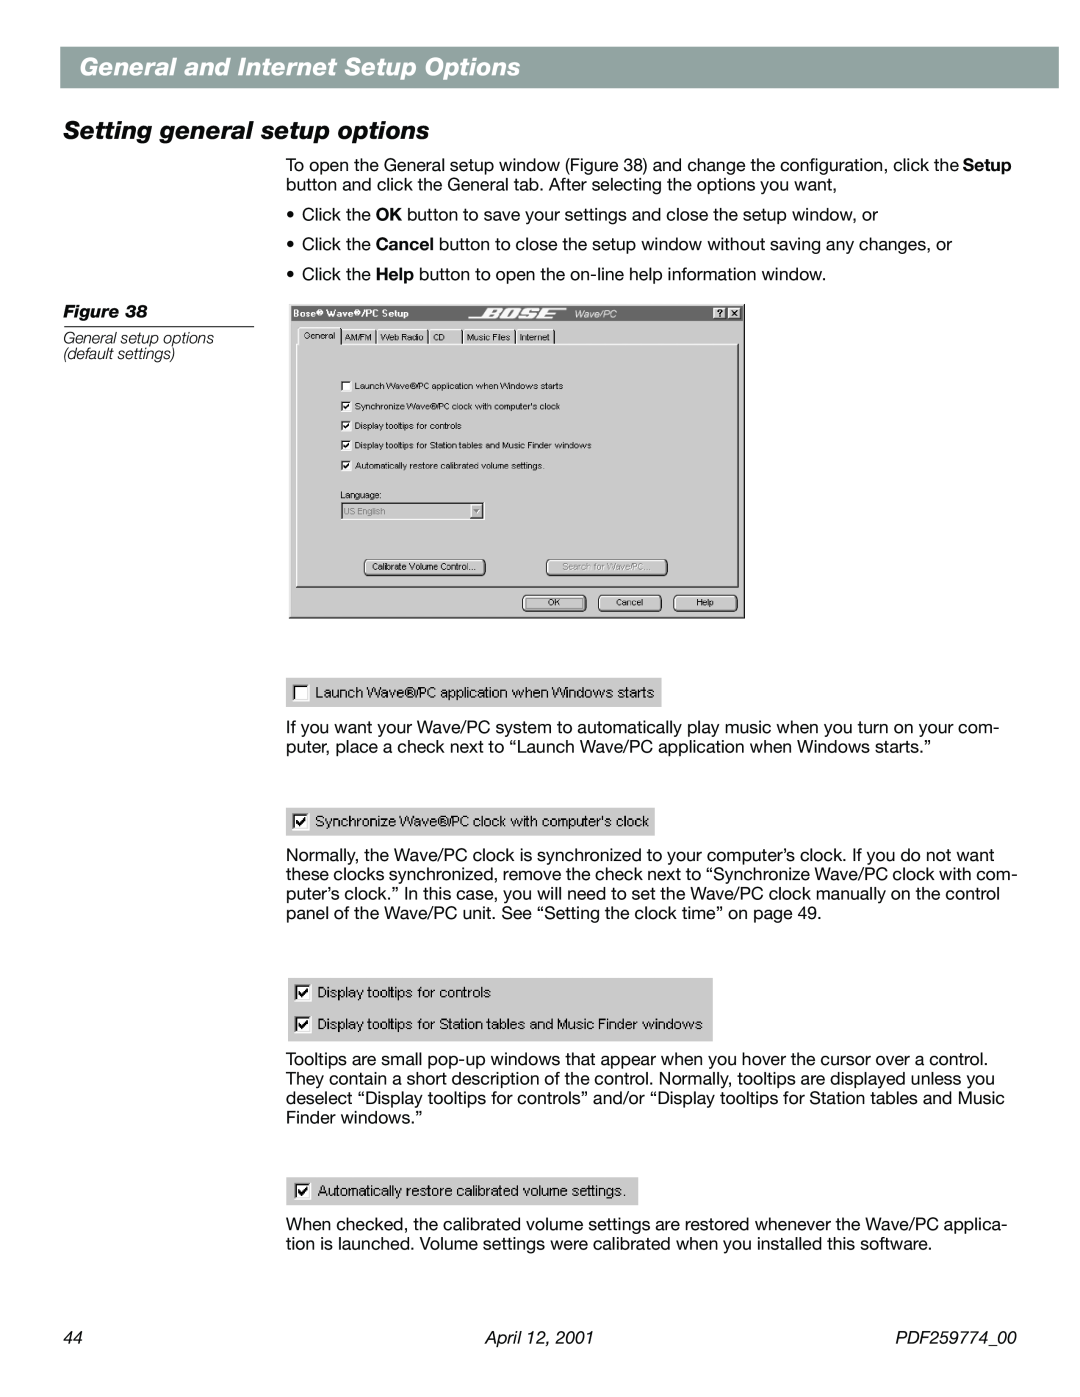 Bose PDF259774_00 manual General and Internet Setup Options, Setting general setup options 